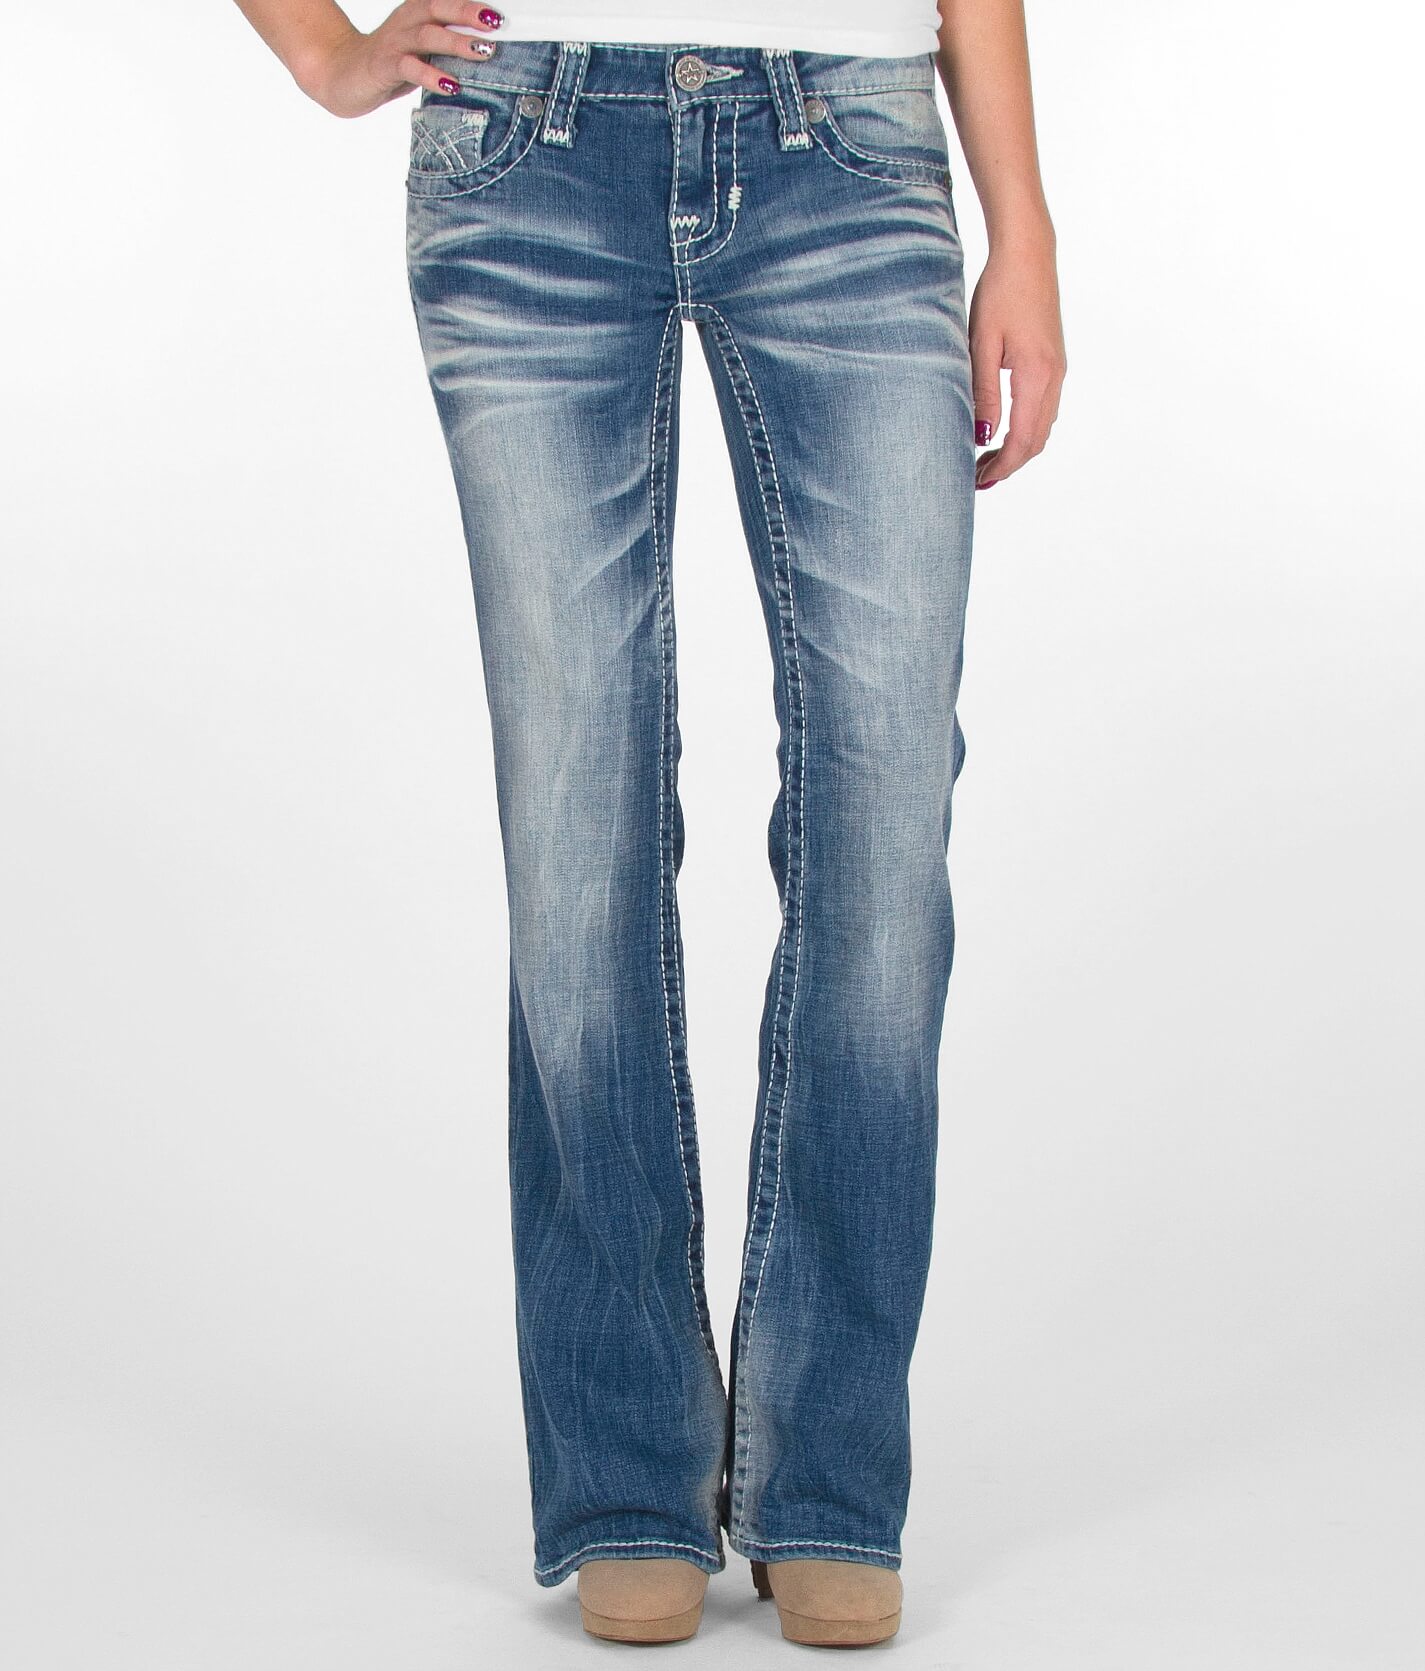 denim style jeans